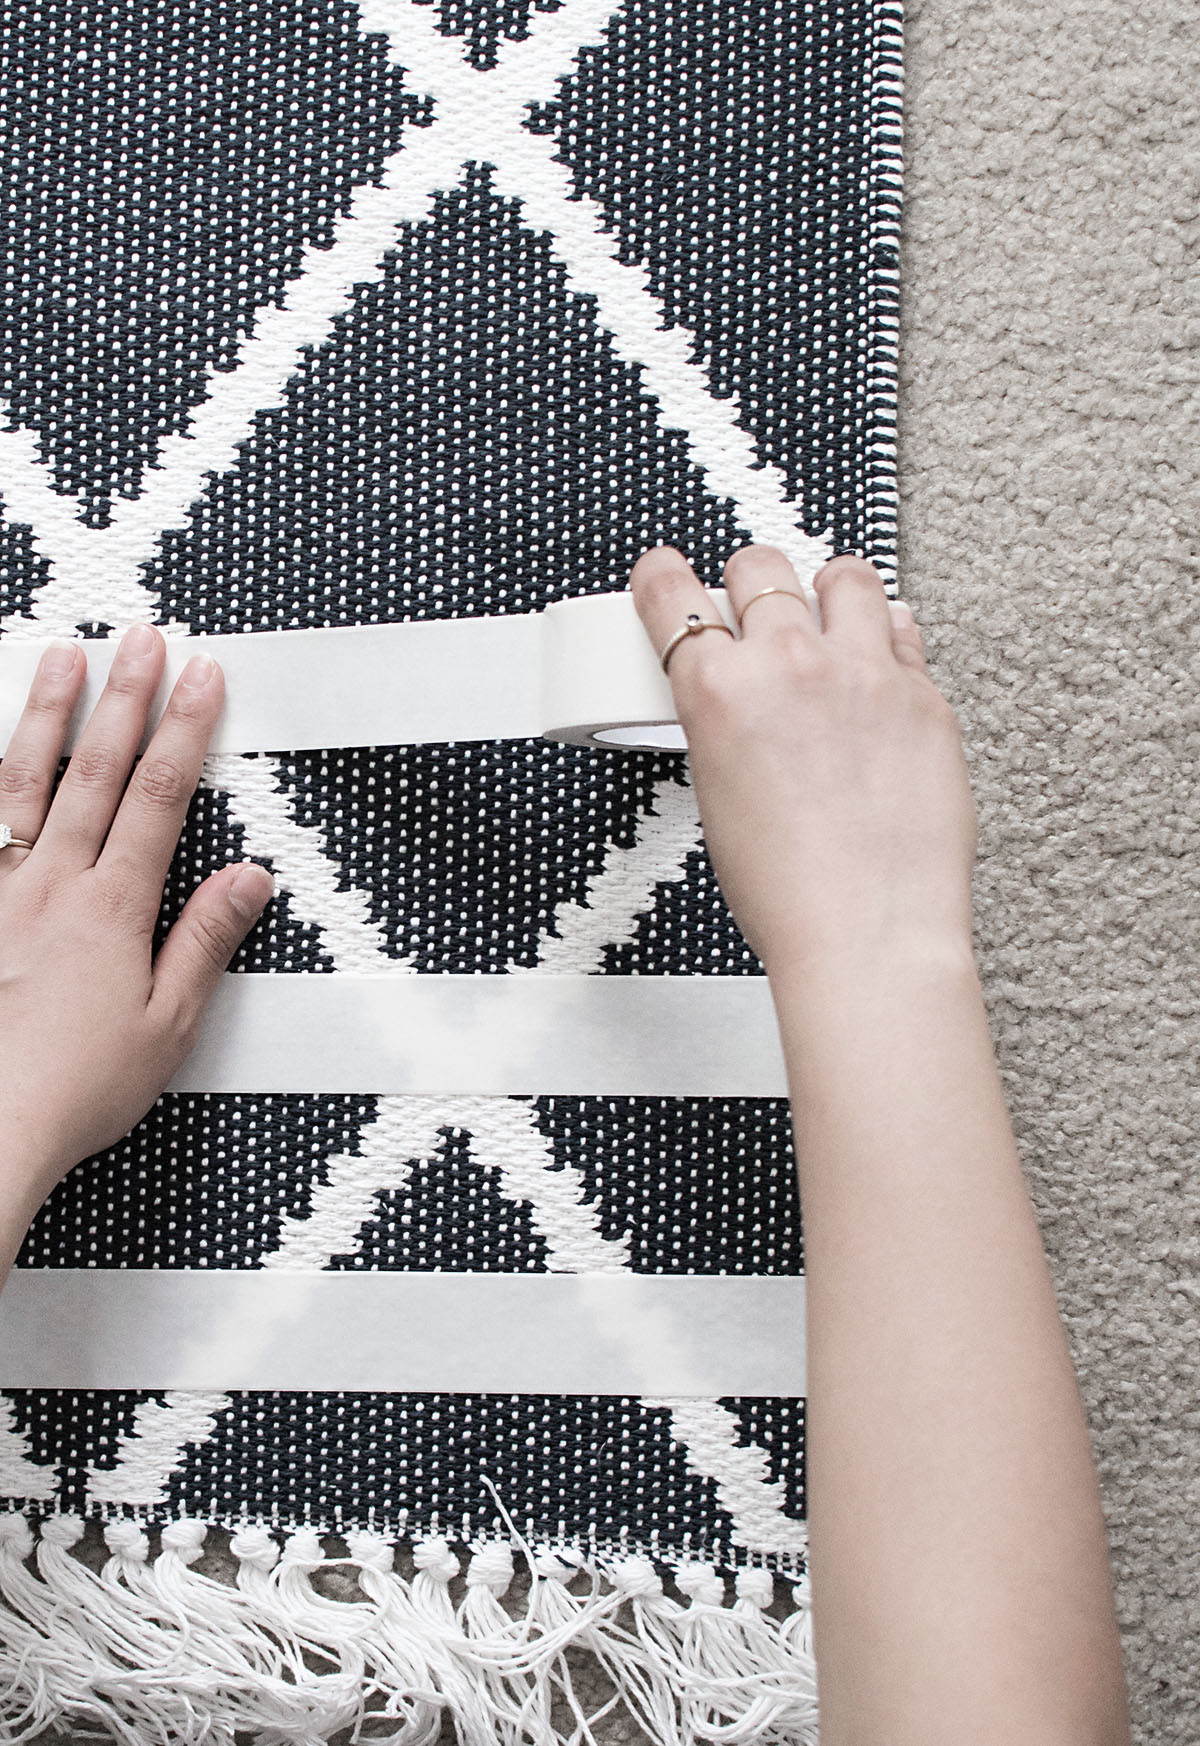 carpet to carpet tape